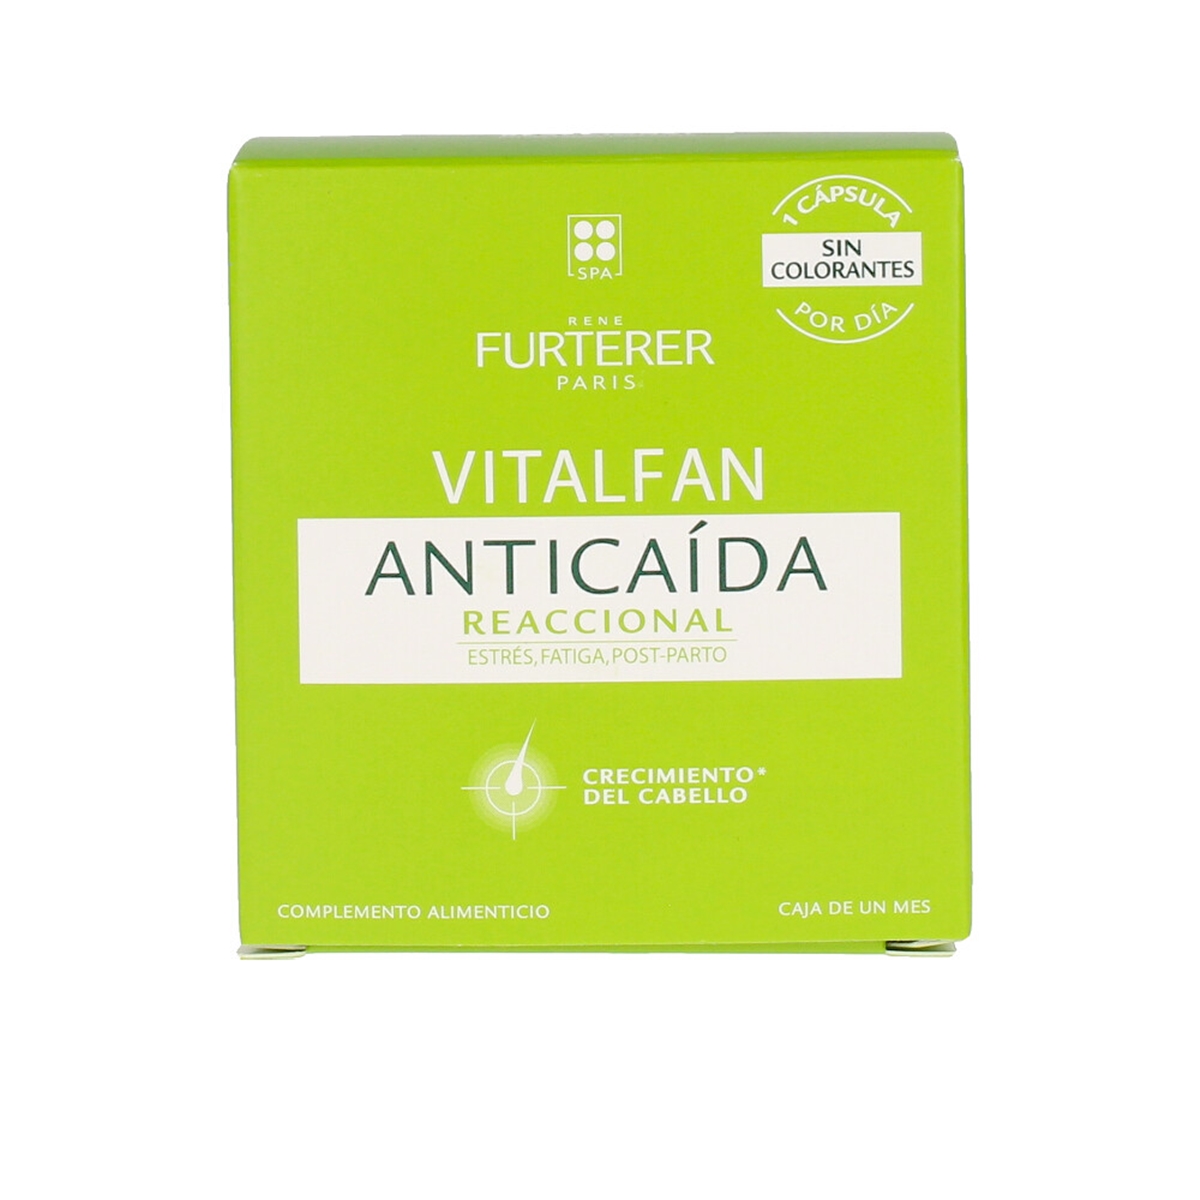 vitalfan anticaida